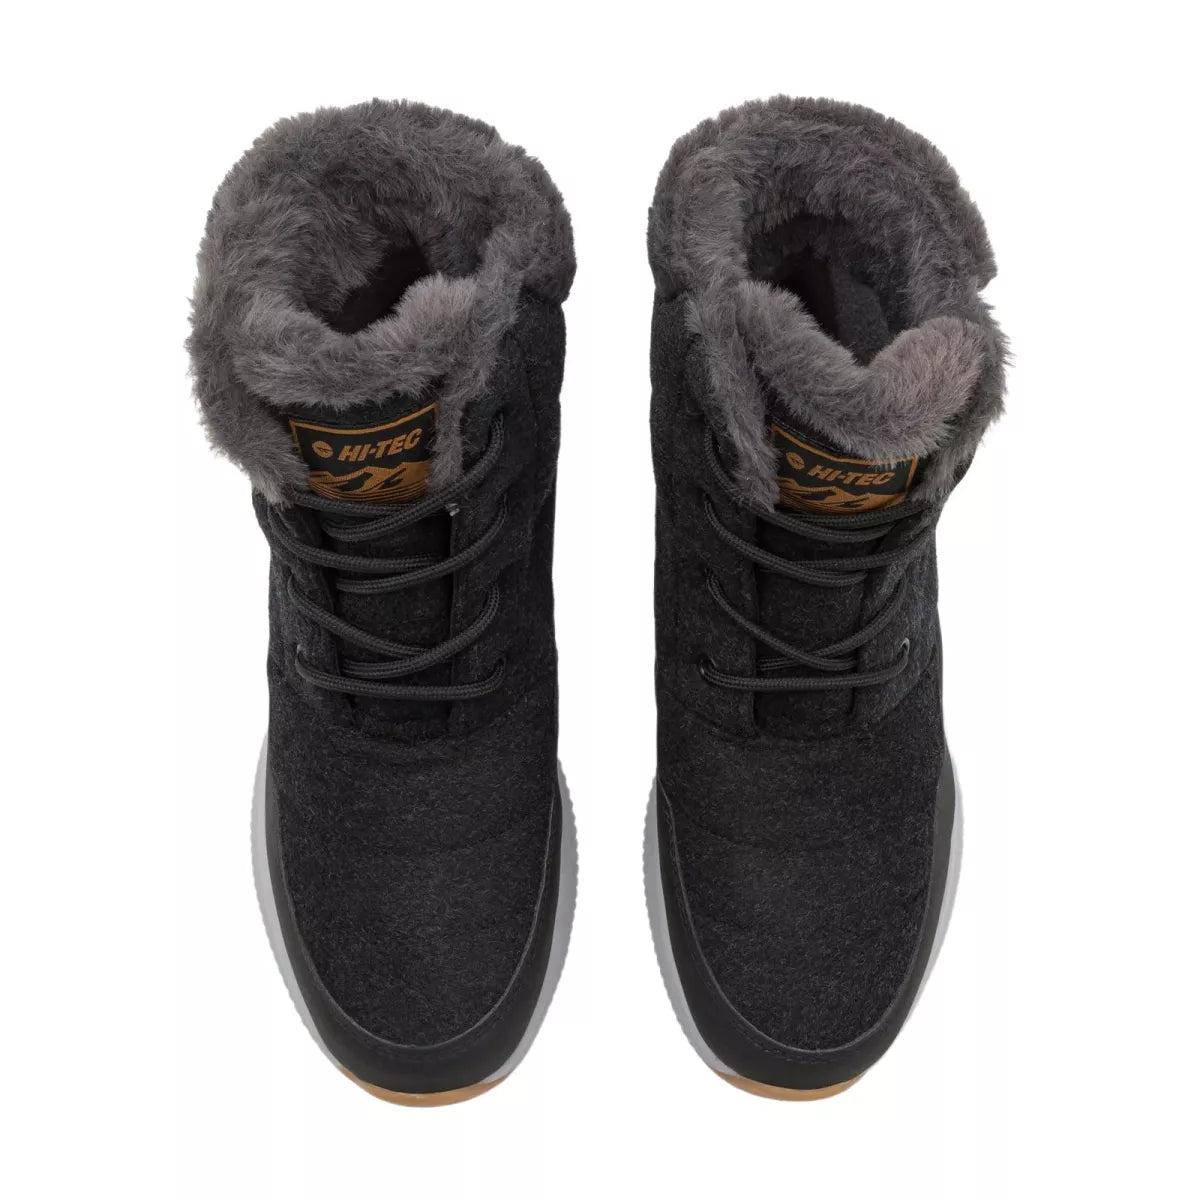 Hi-Tec Ladies Frosty Felt WP 200 Black/Camel Waterproof Insulated Boots